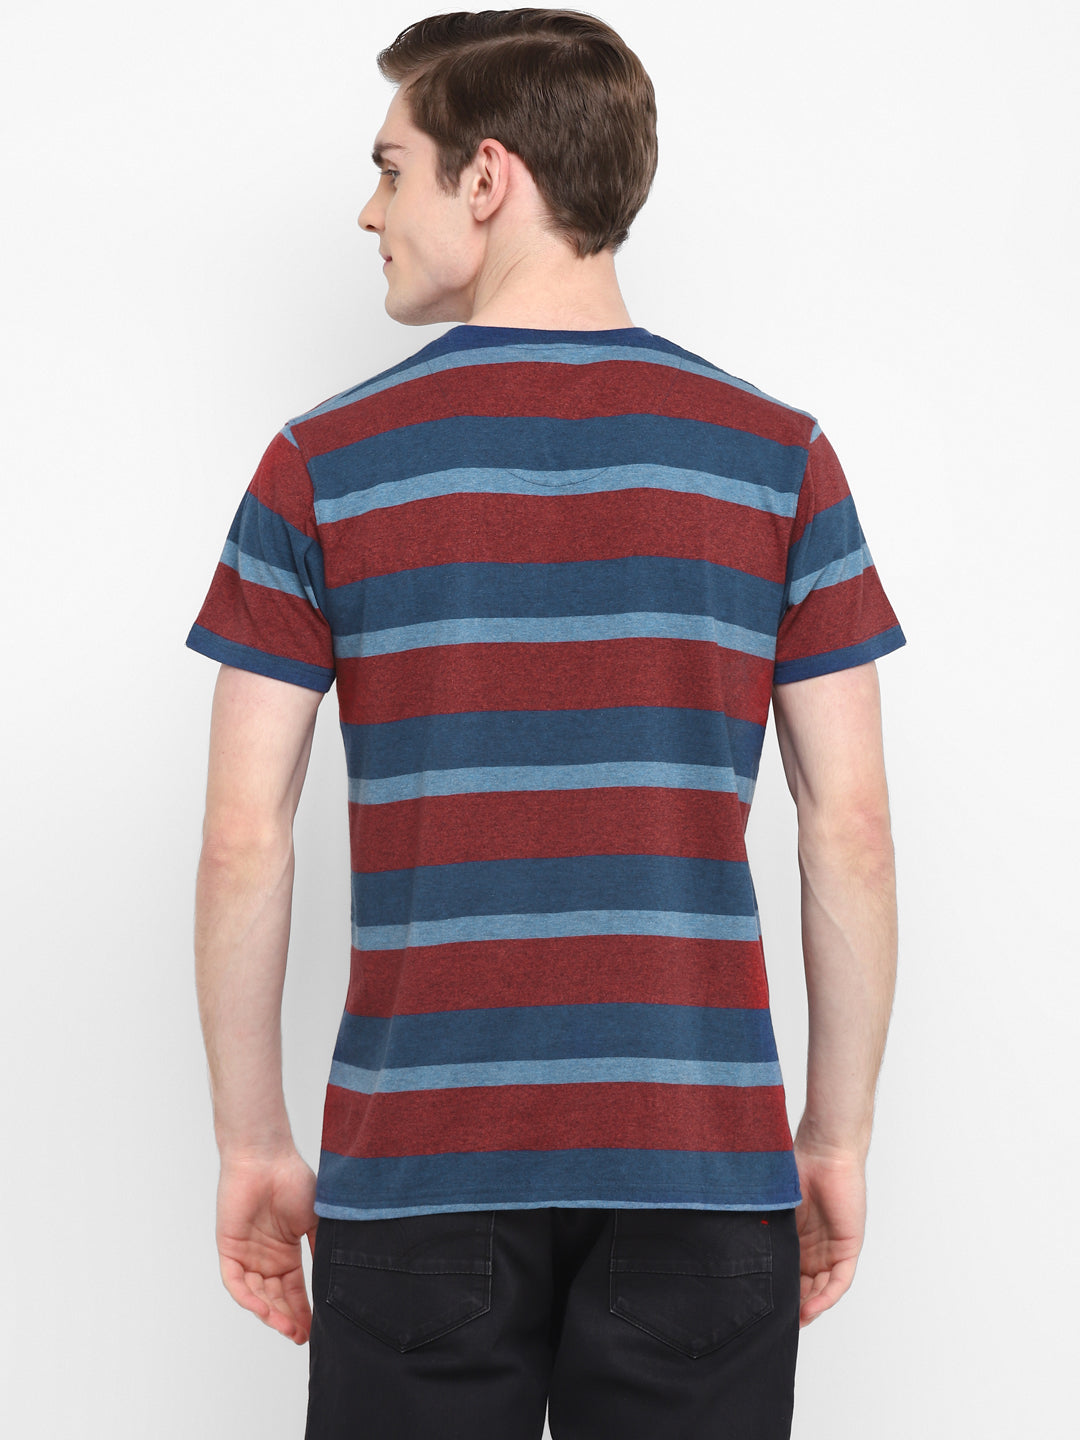 Premium Basics - 100% Cotton Striped V Neck T-Shirt For Men - Blue & Red